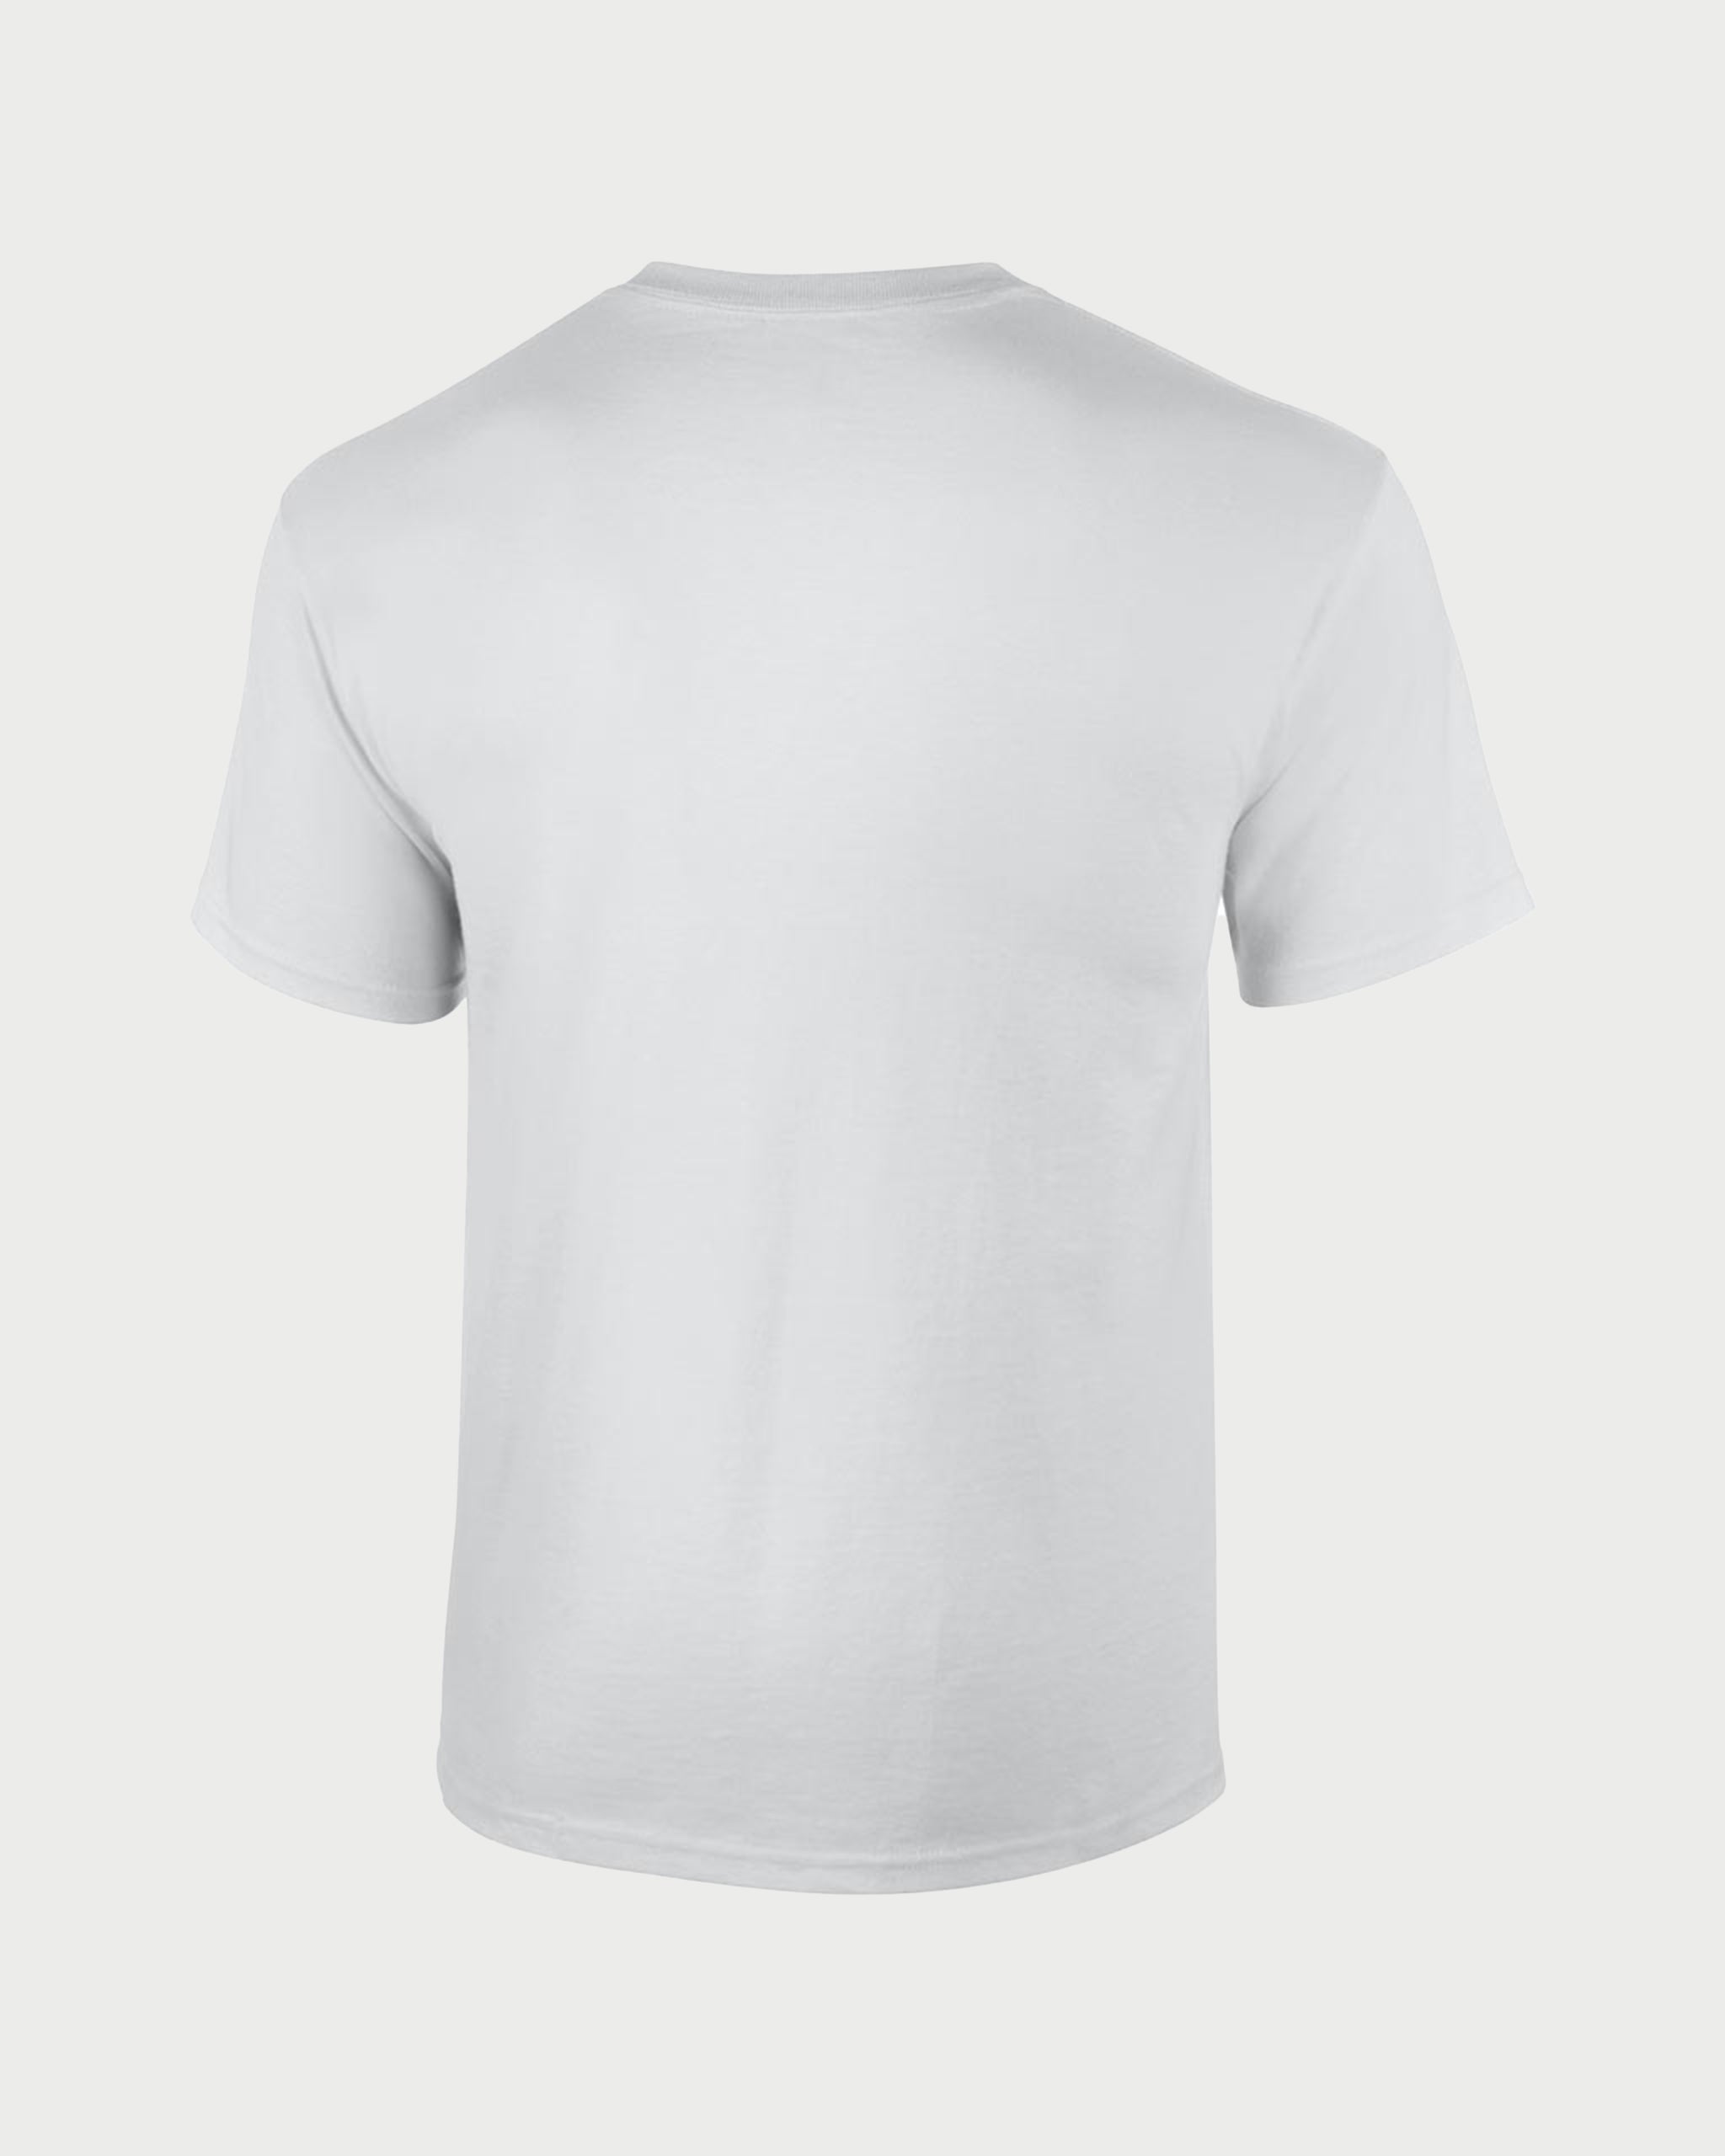 WHITE TEMPLAR - tricou barbatesc, bumbac premium